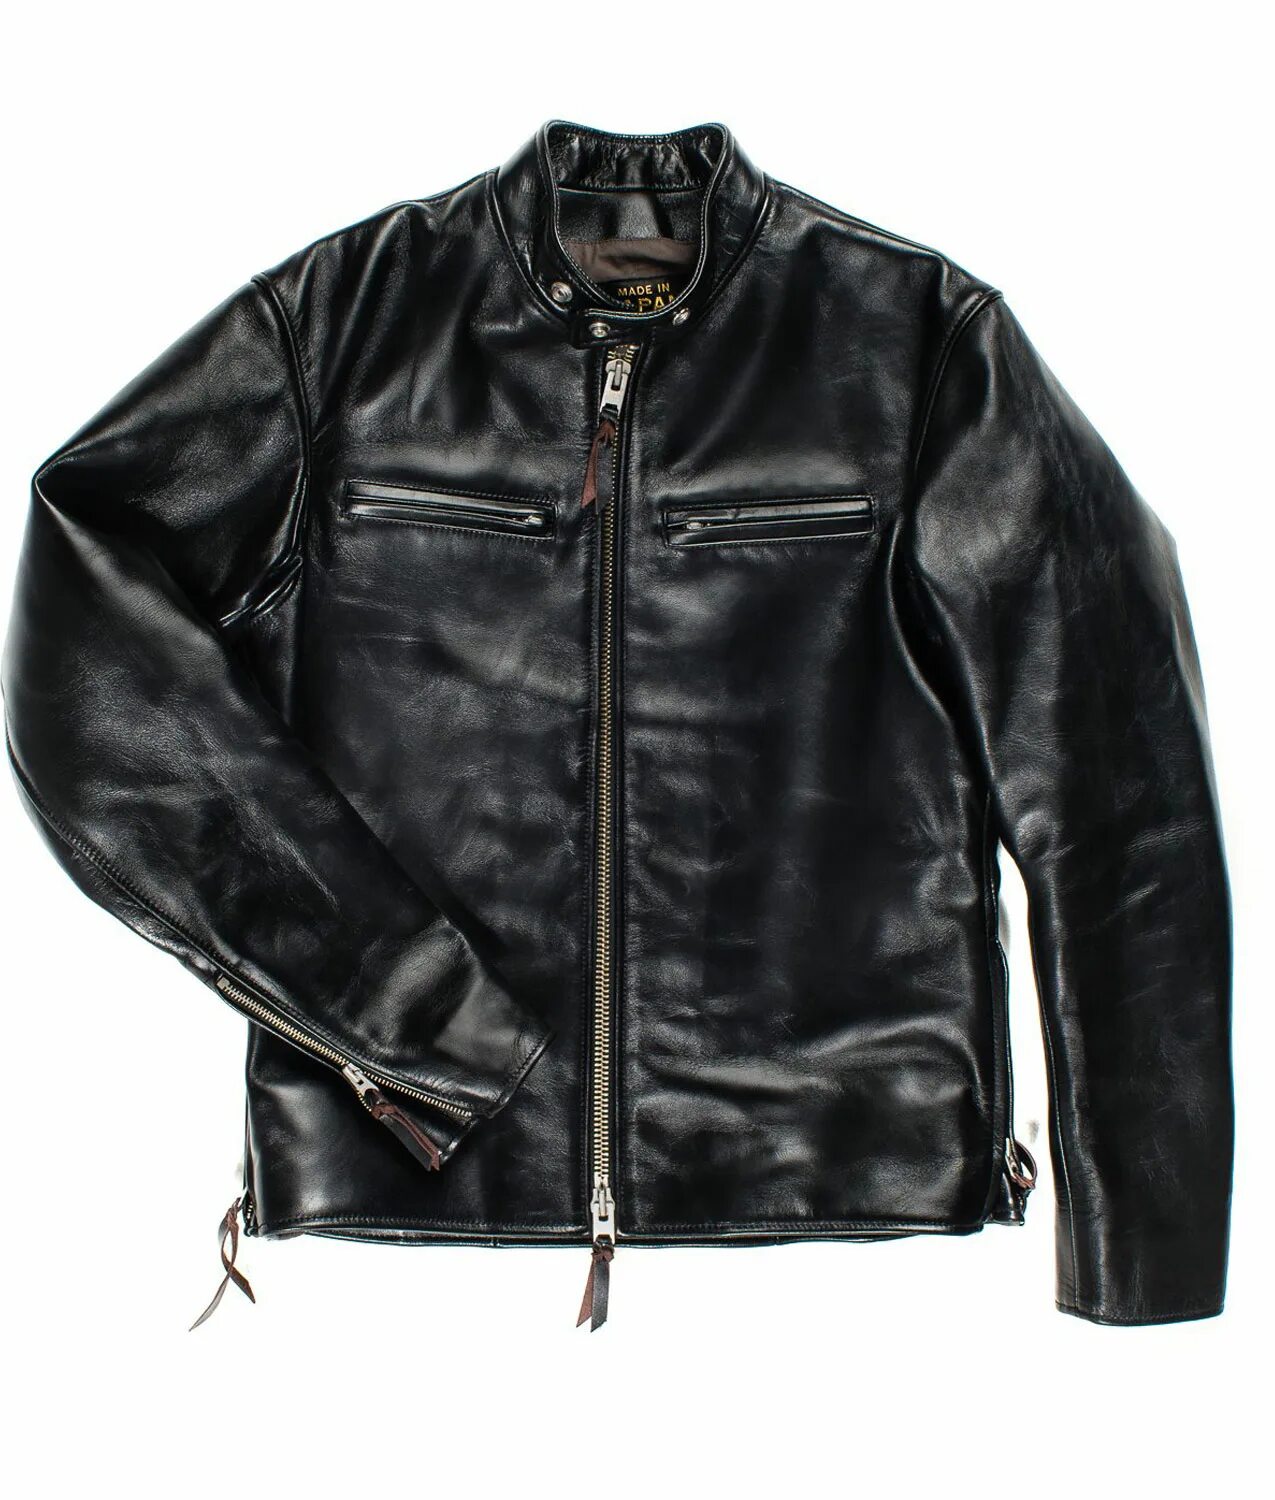 Iron Jacket. Измятая куртка. Iron Heart IHJ-124 Black. Как гладить кожаную куртку.